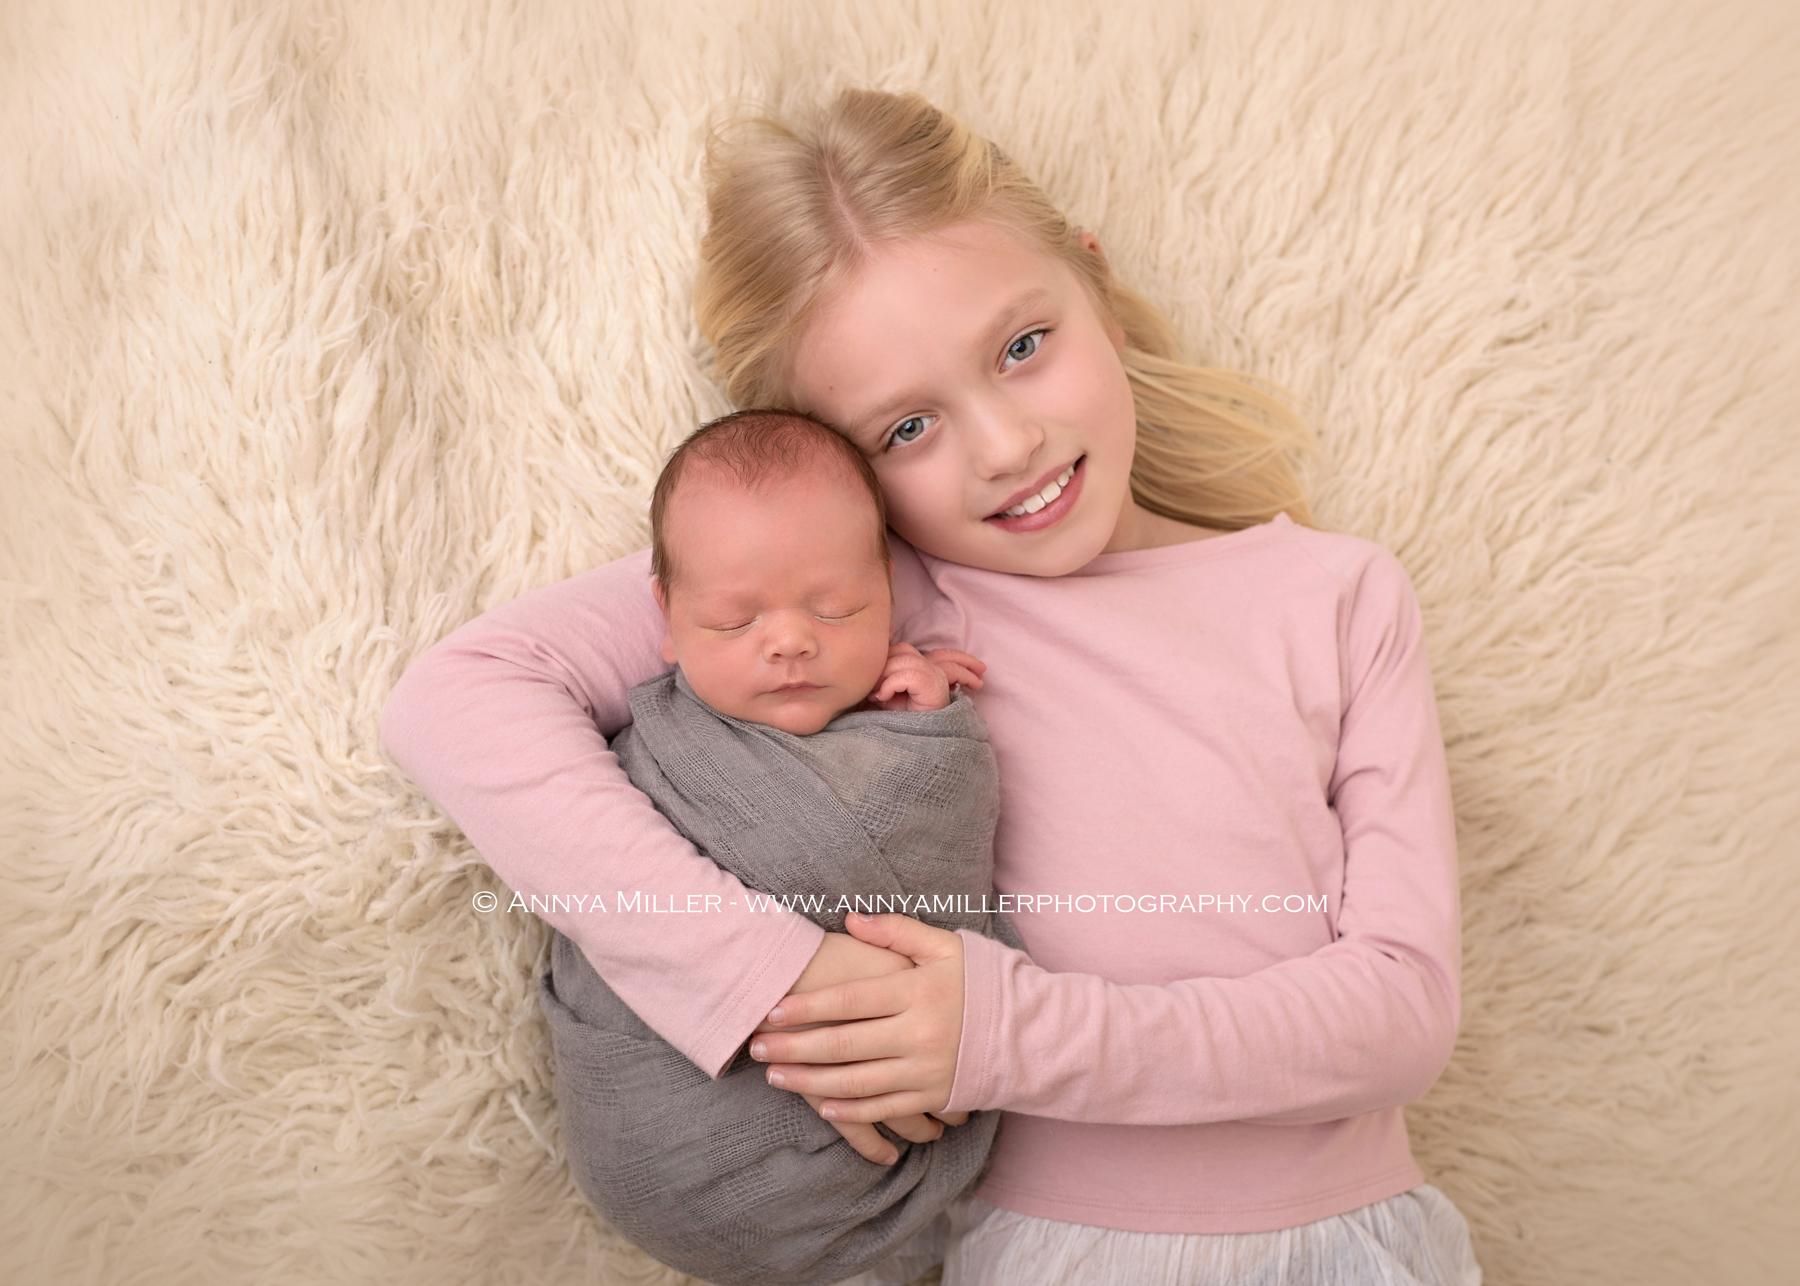 Newborn portrait of baby boy and big sister by Toronto newborn photographer Annya Miller 